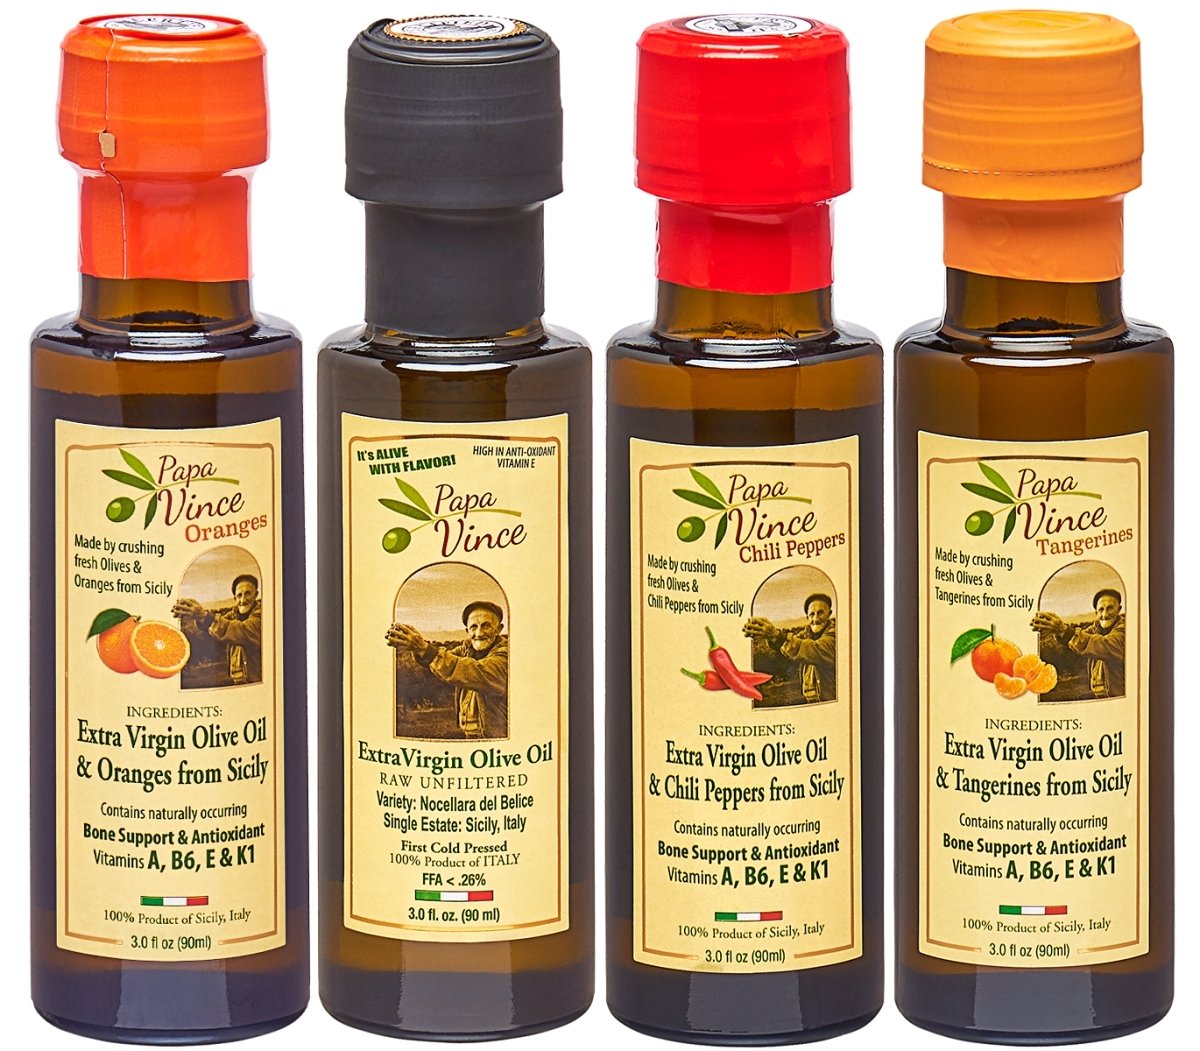 Flavored Olive Oil Extra Virgin 4 Set from Sicily - Original, Chili, Orange, Tangerine Infused Olive Oil Gift | Papa Vince | 3 fl oz each - Papa Vince